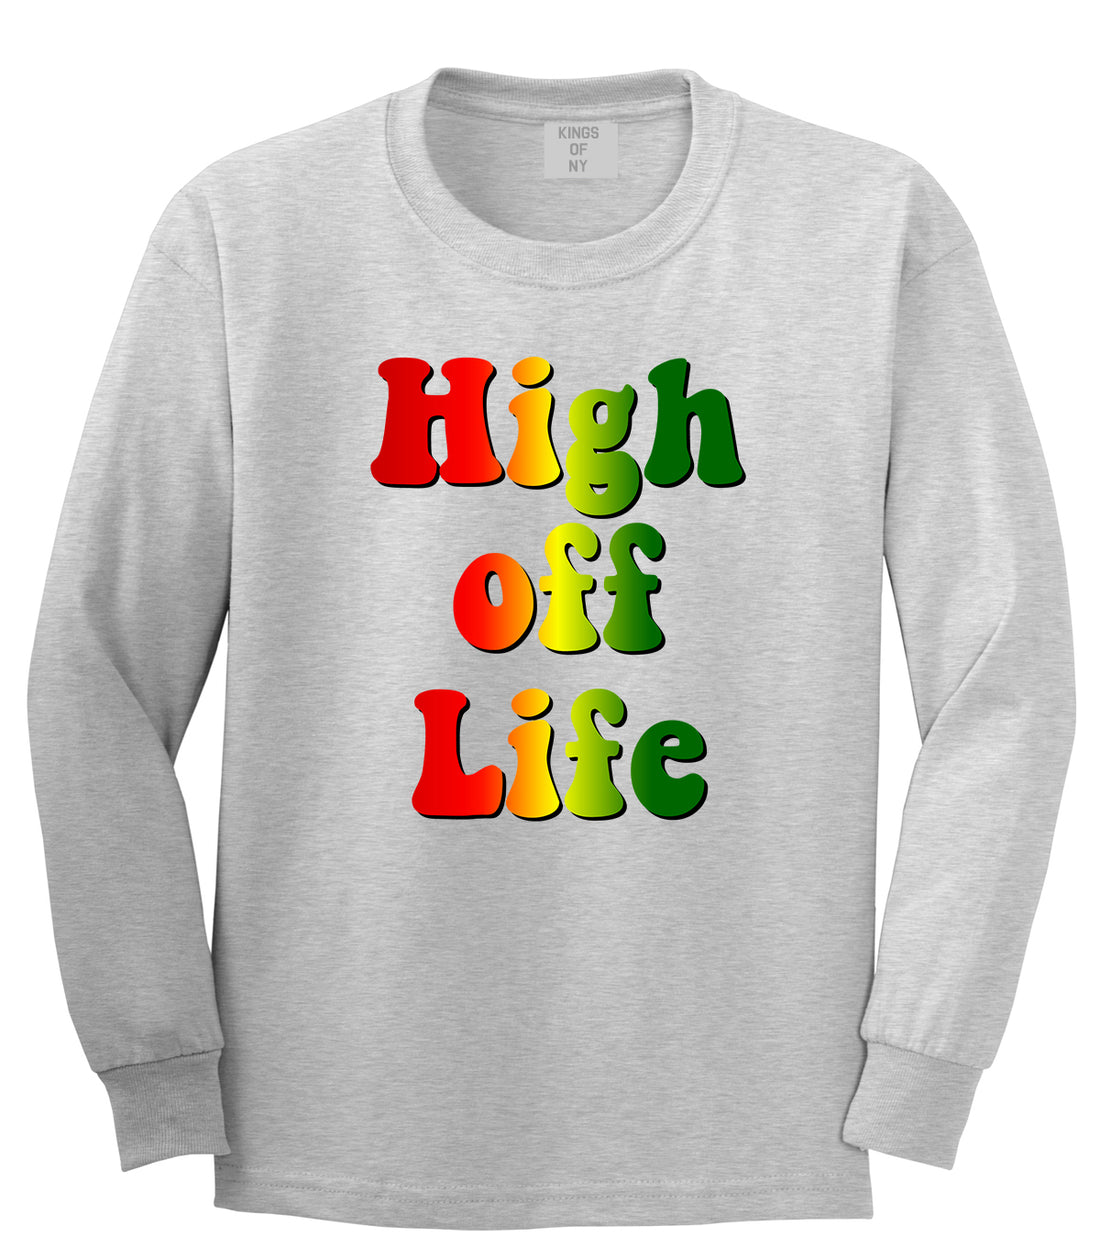 High Off Life Mens Long Sleeve T-Shirt Grey by Kings Of NY